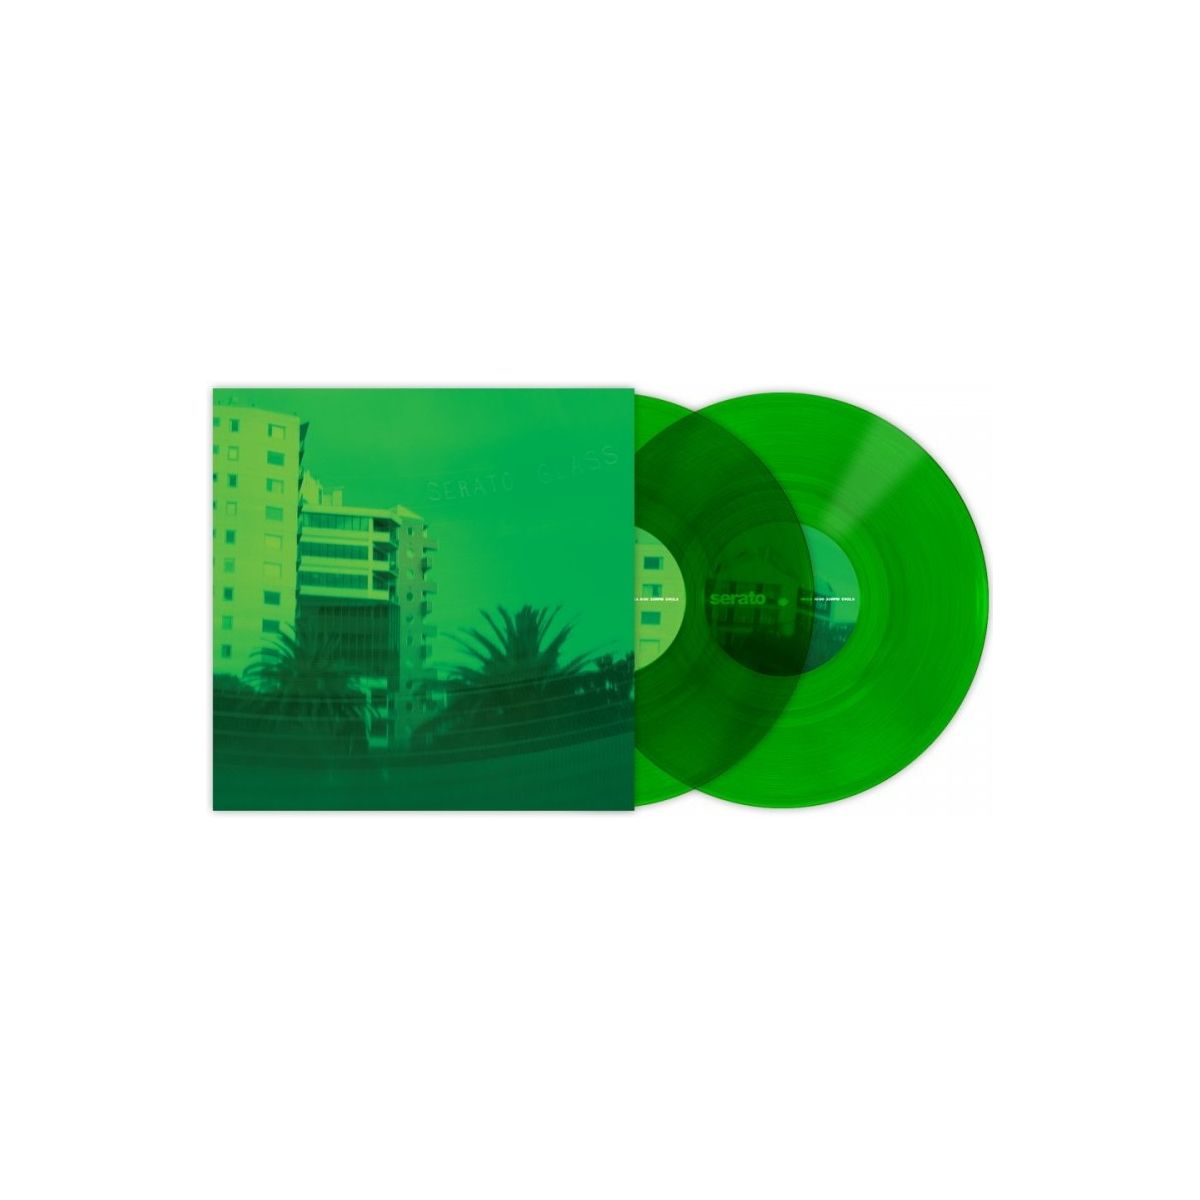 Vinyles time codés - Serato - Paire Vinyl Green 10